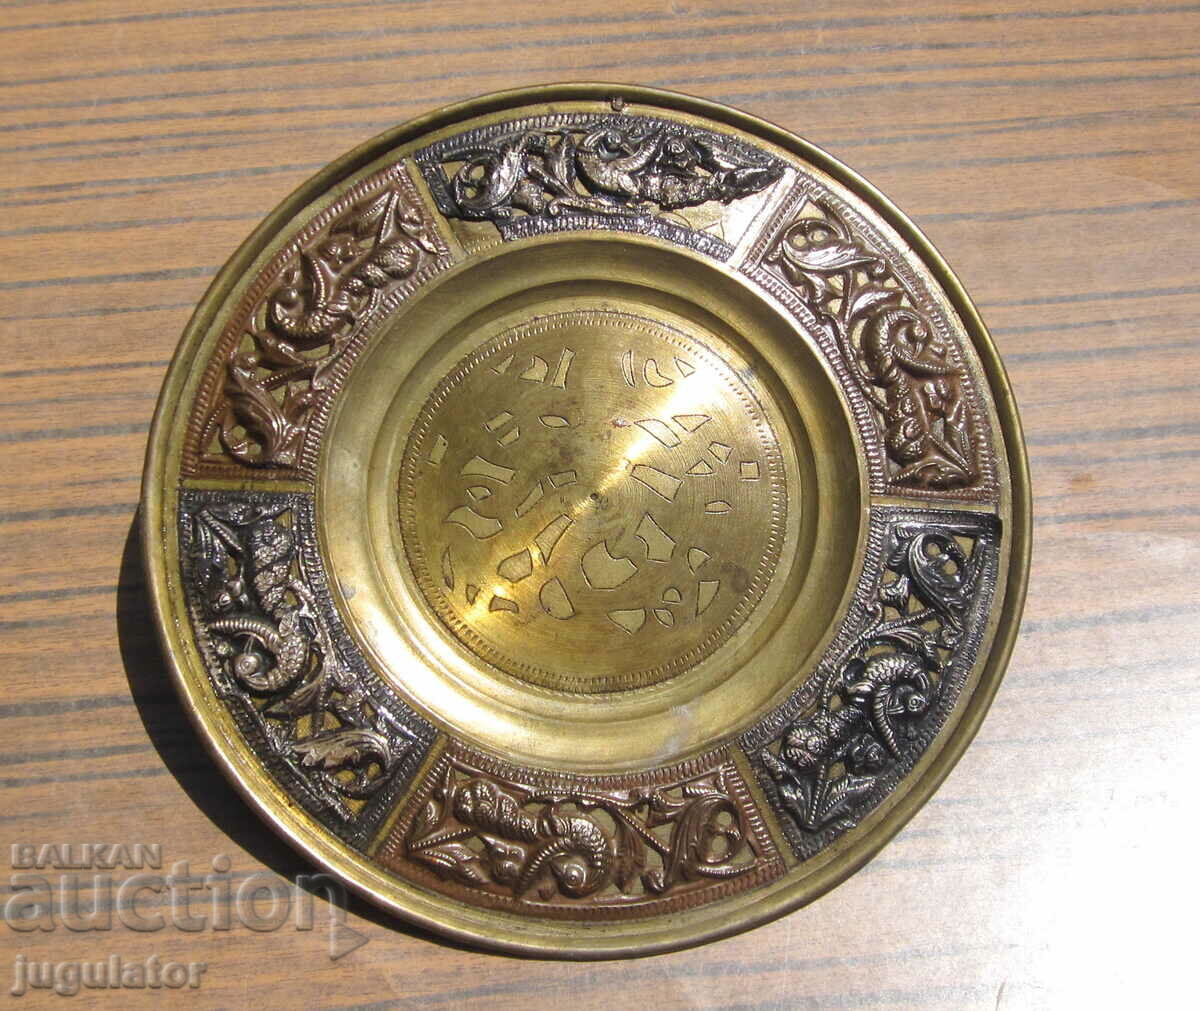 Bulgarian Renaissance plate with folk silver ornaments